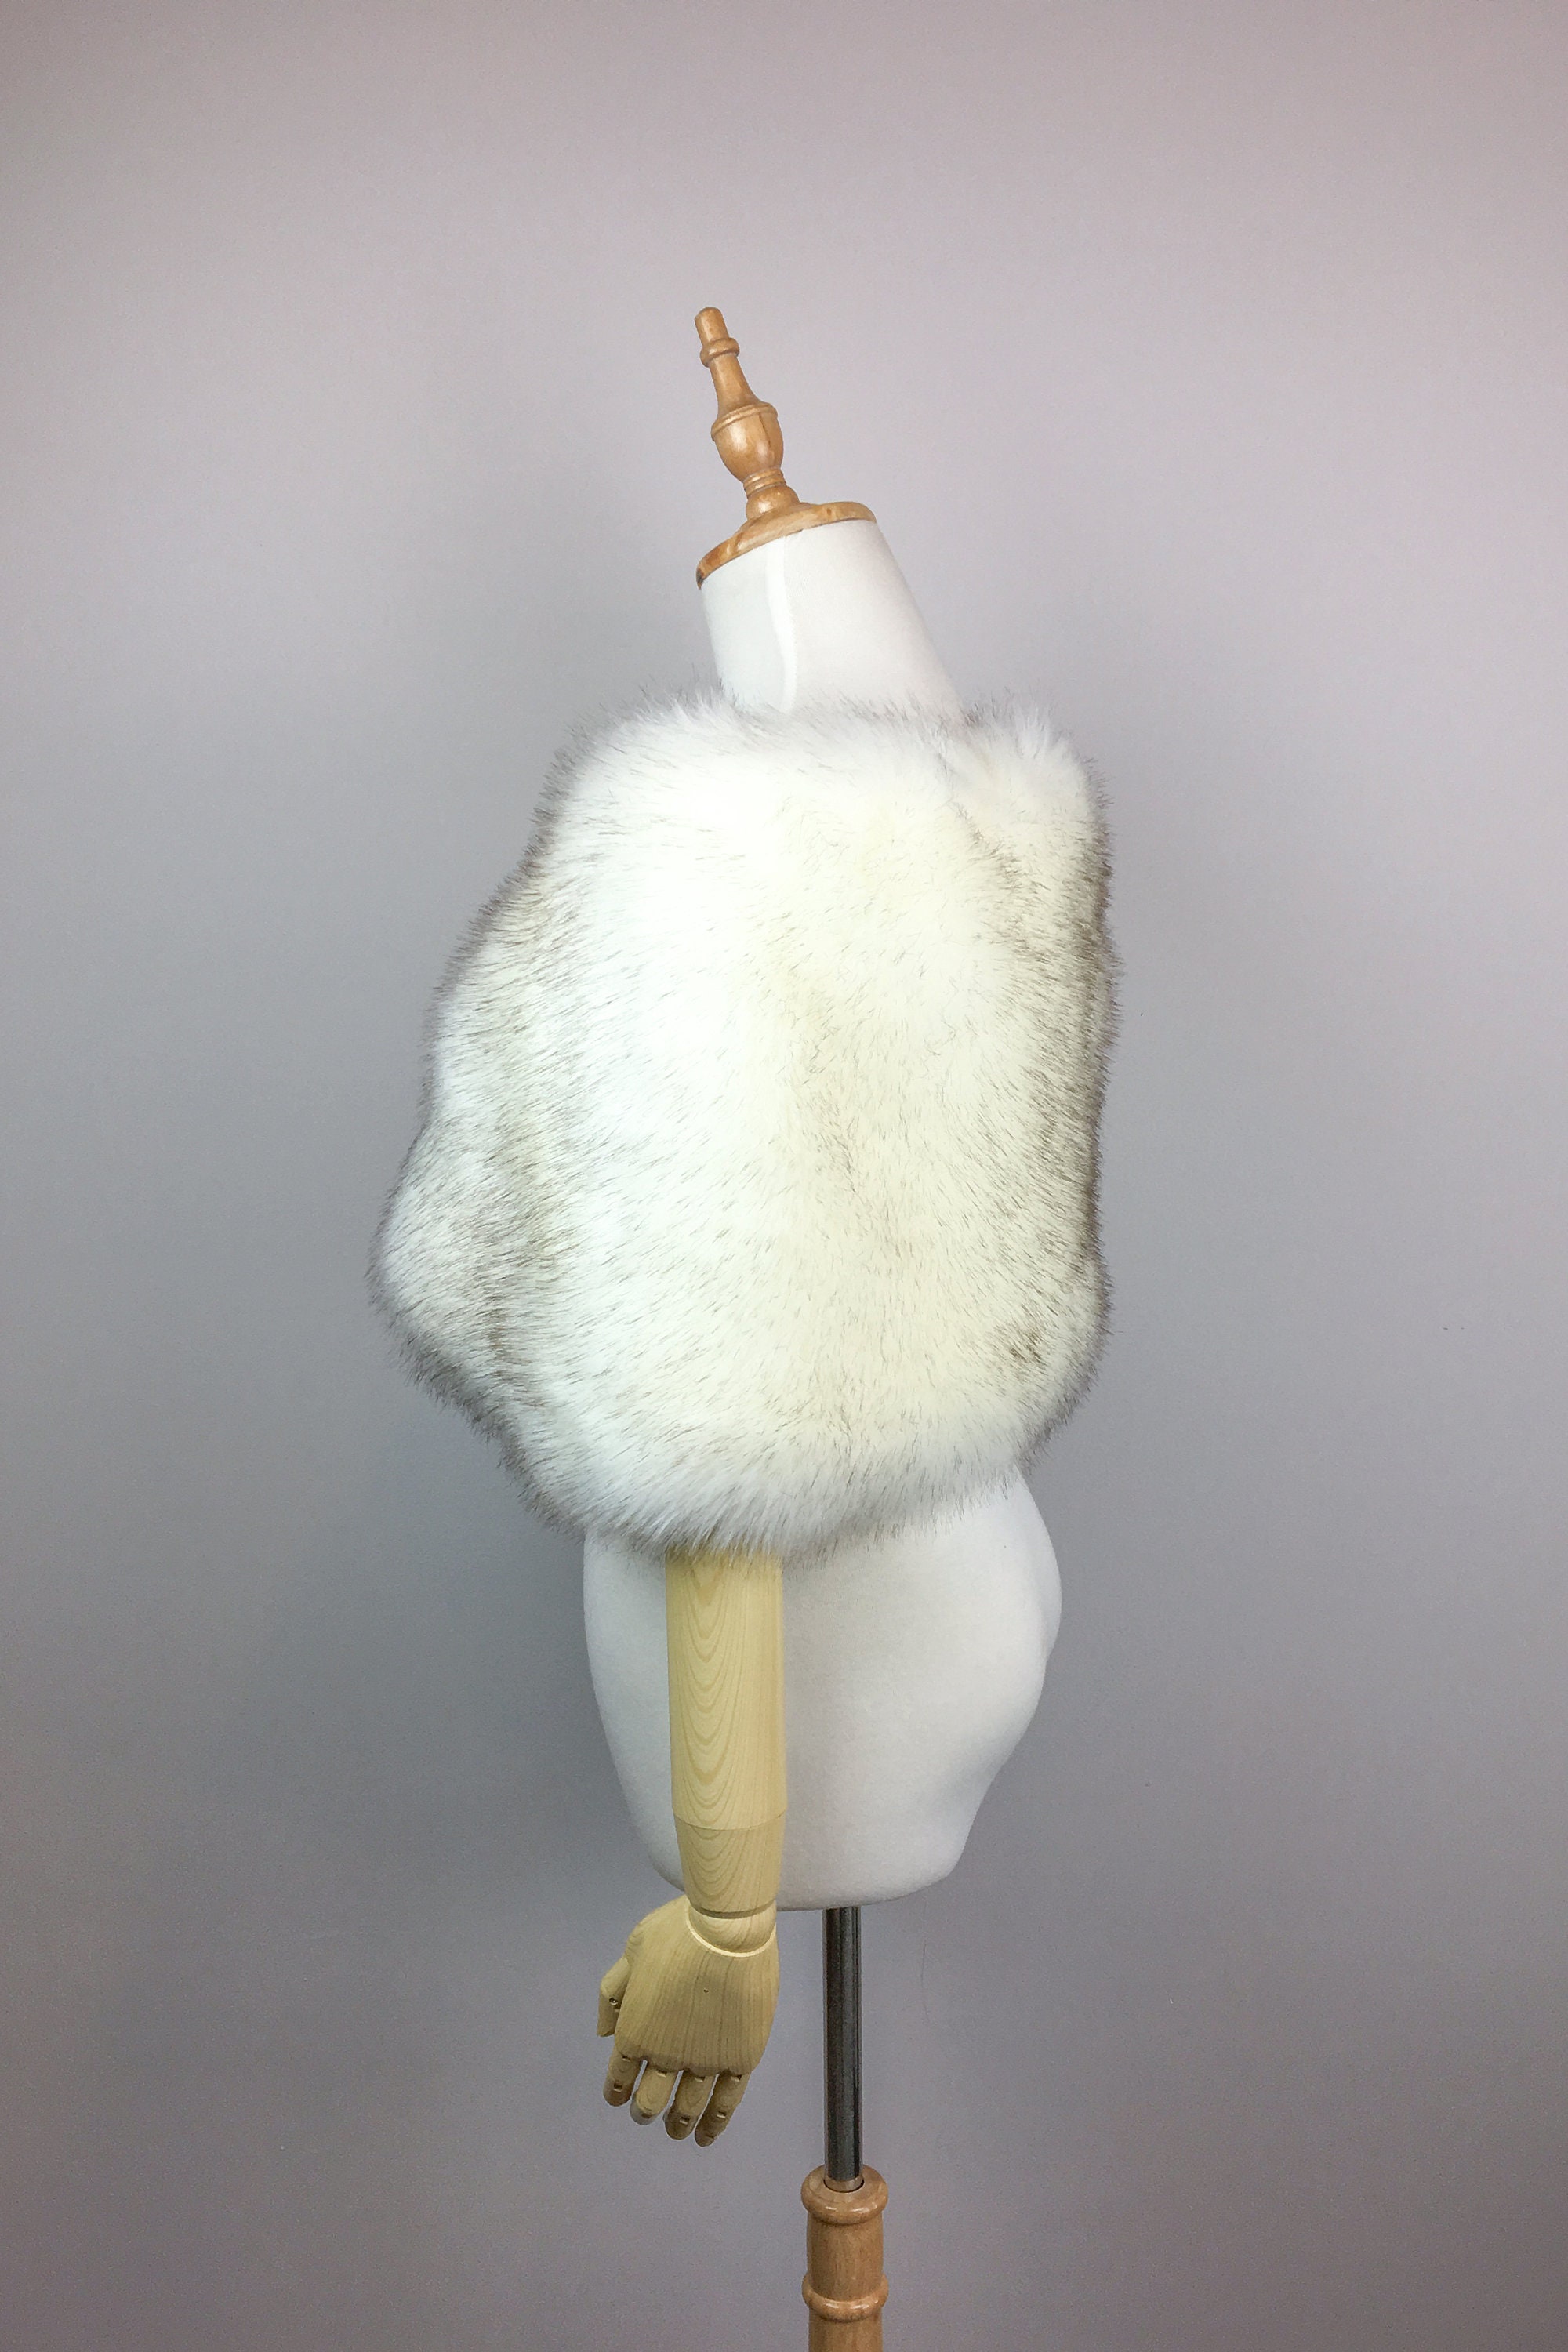 Ivory with Black Tips fur bridal wrap Wedding Fur shrug | Etsy